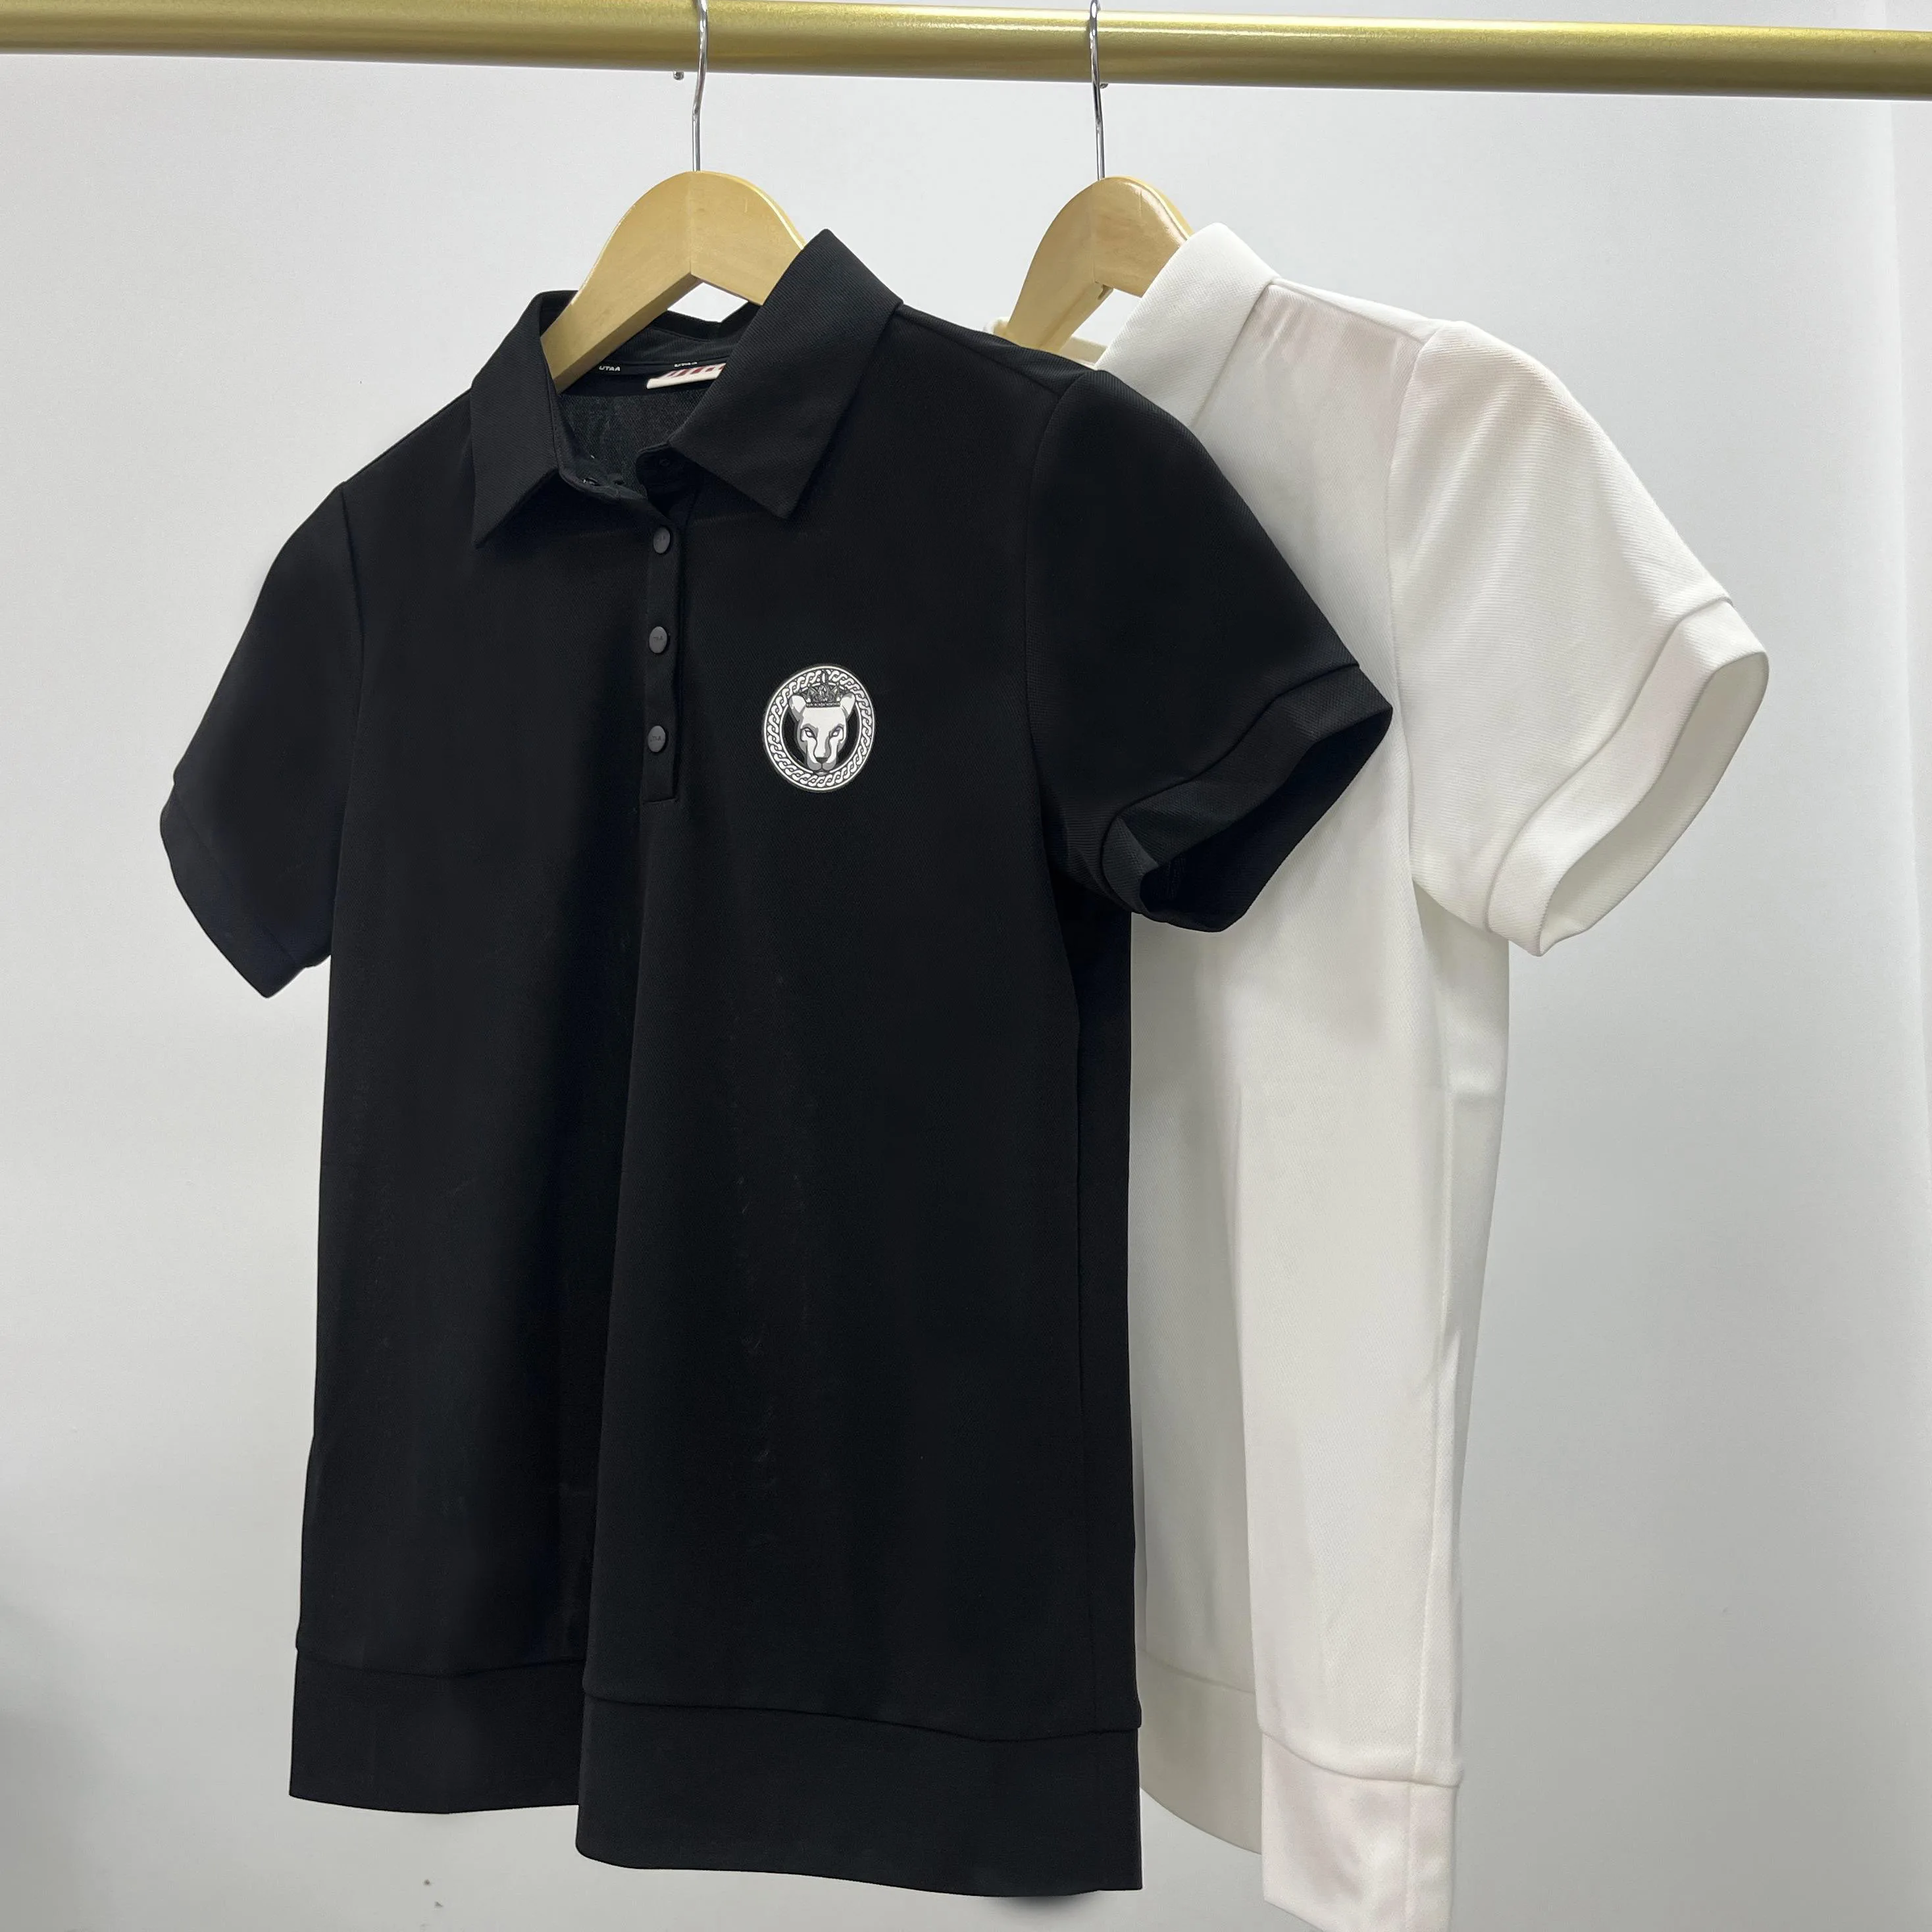 

New Golf T-Shirt Women Utah Summer Quick Dry Golf Wear Polo Shirt Black and White Sports Tennis Short Sleeves Golf Clothing